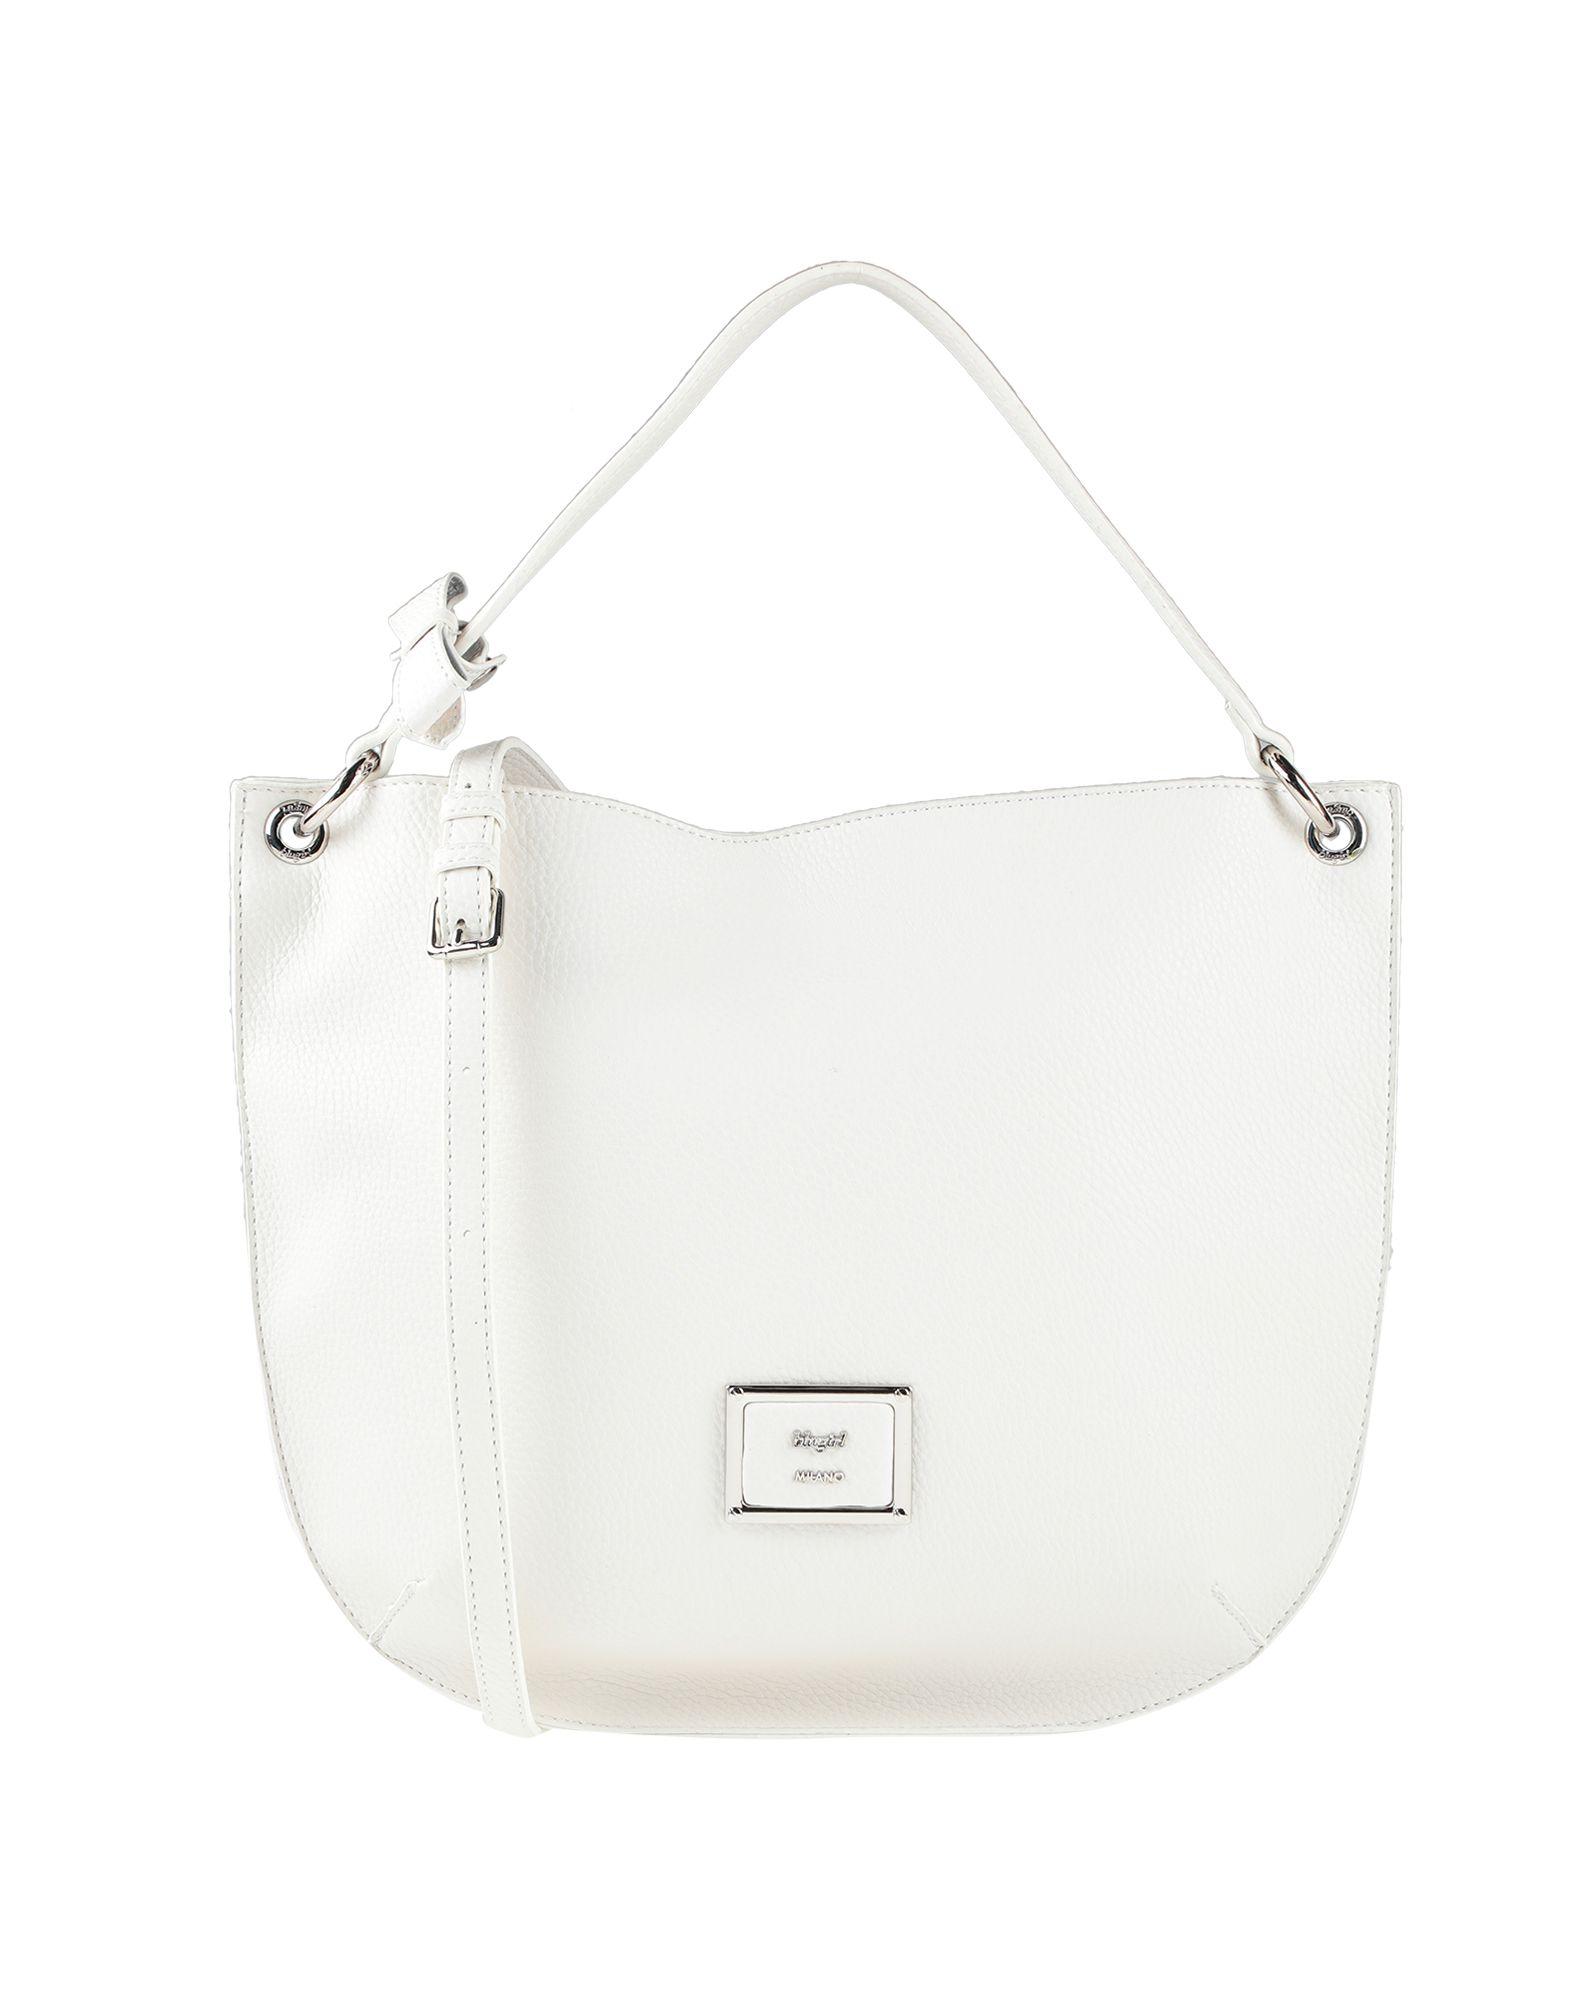 Blugirl Blumarine Handbag in Ivory (White) - Lyst